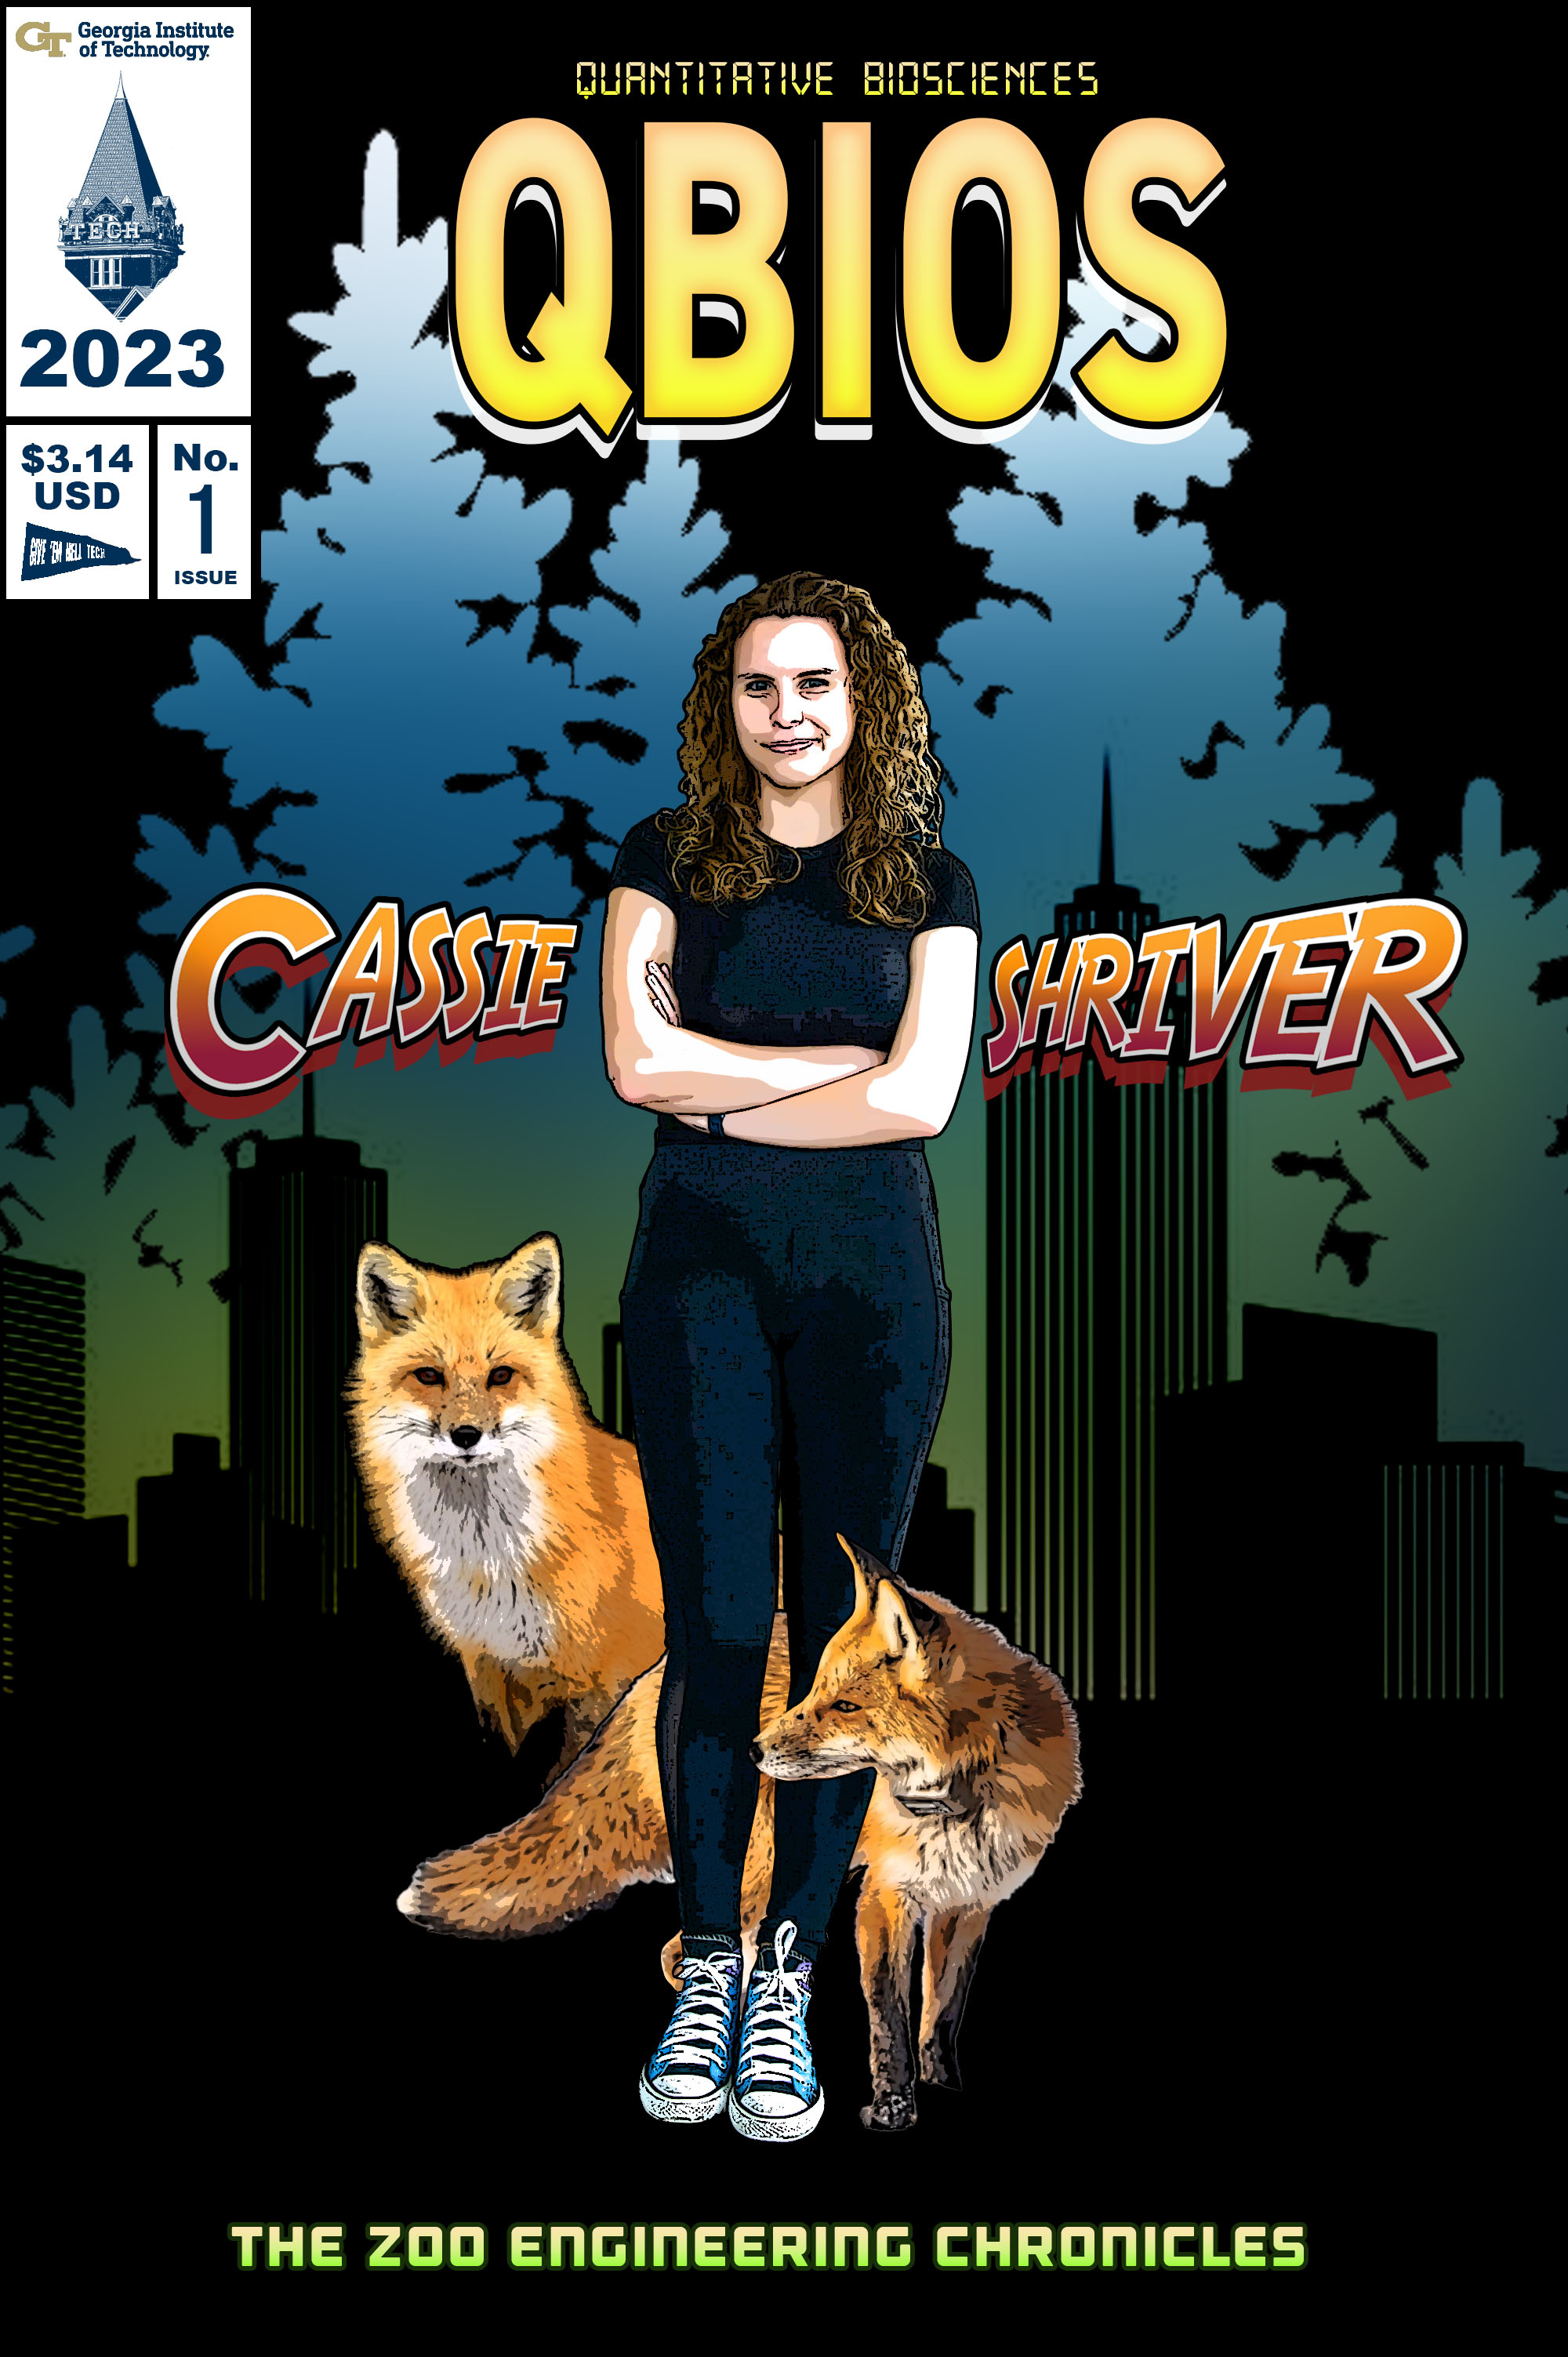 A comic book stylization of Cassie Shriver titled, "QBIOS"